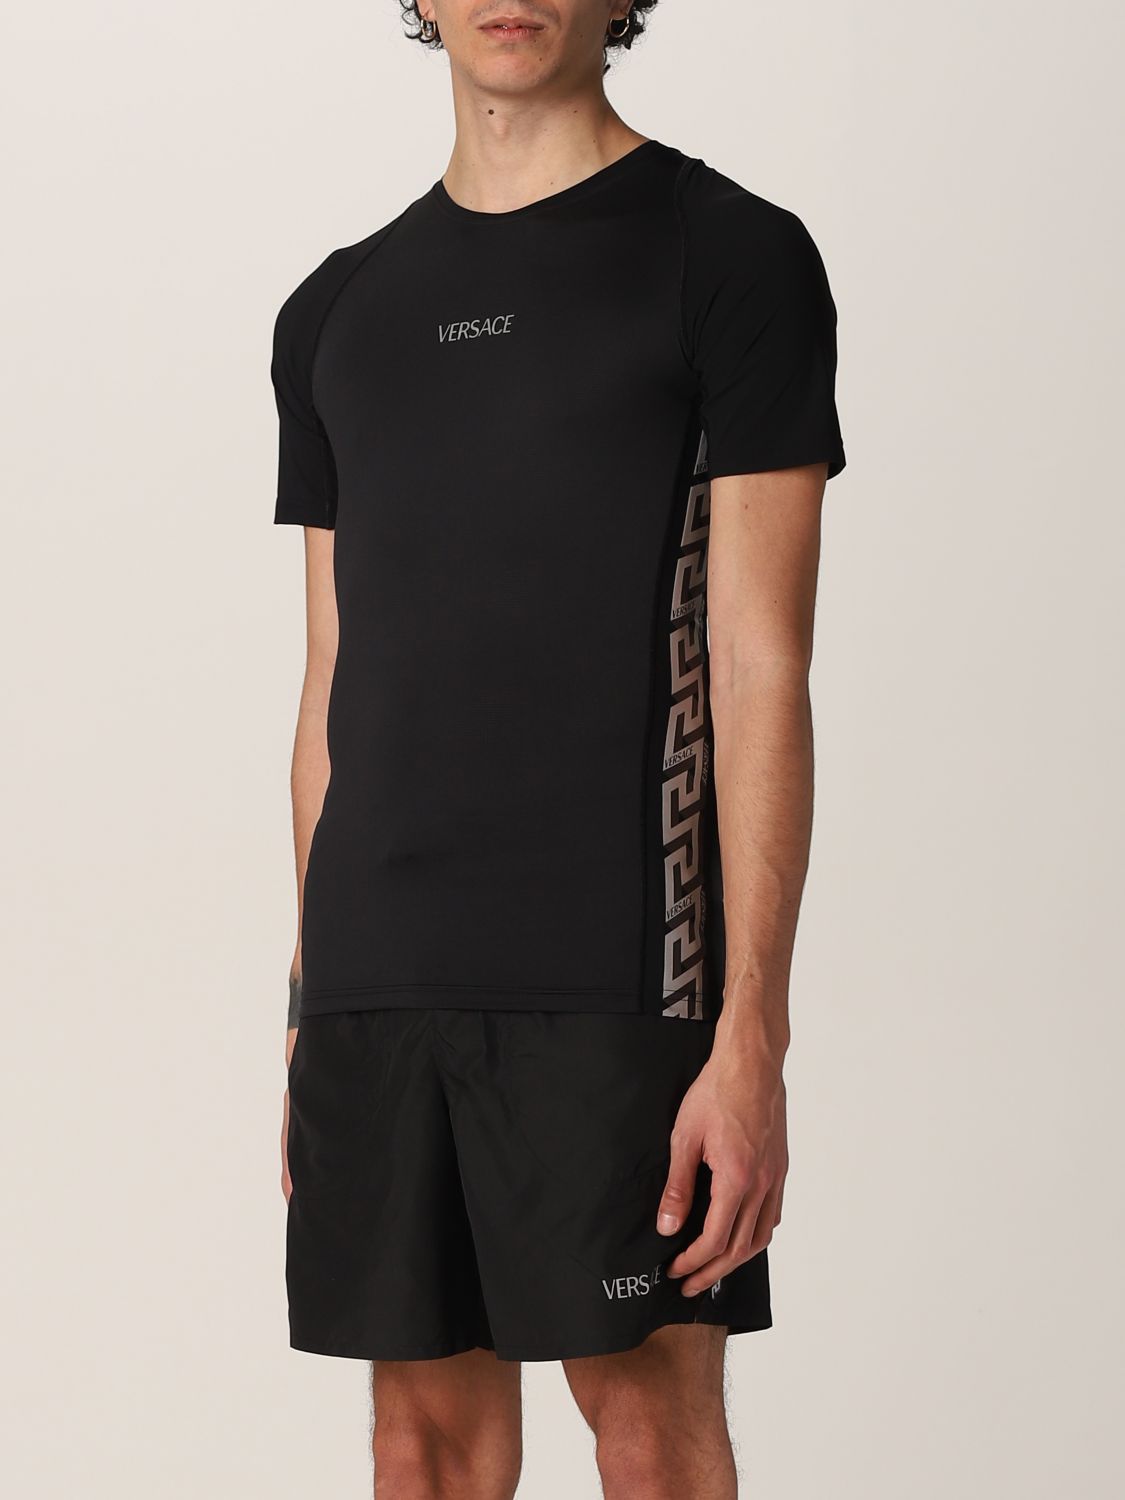 Dollar De onze Voel me slecht VERSACE: sporty t-shirt with bands - Black | Versace t-shirt 10041201A01752  online on GIGLIO.COM